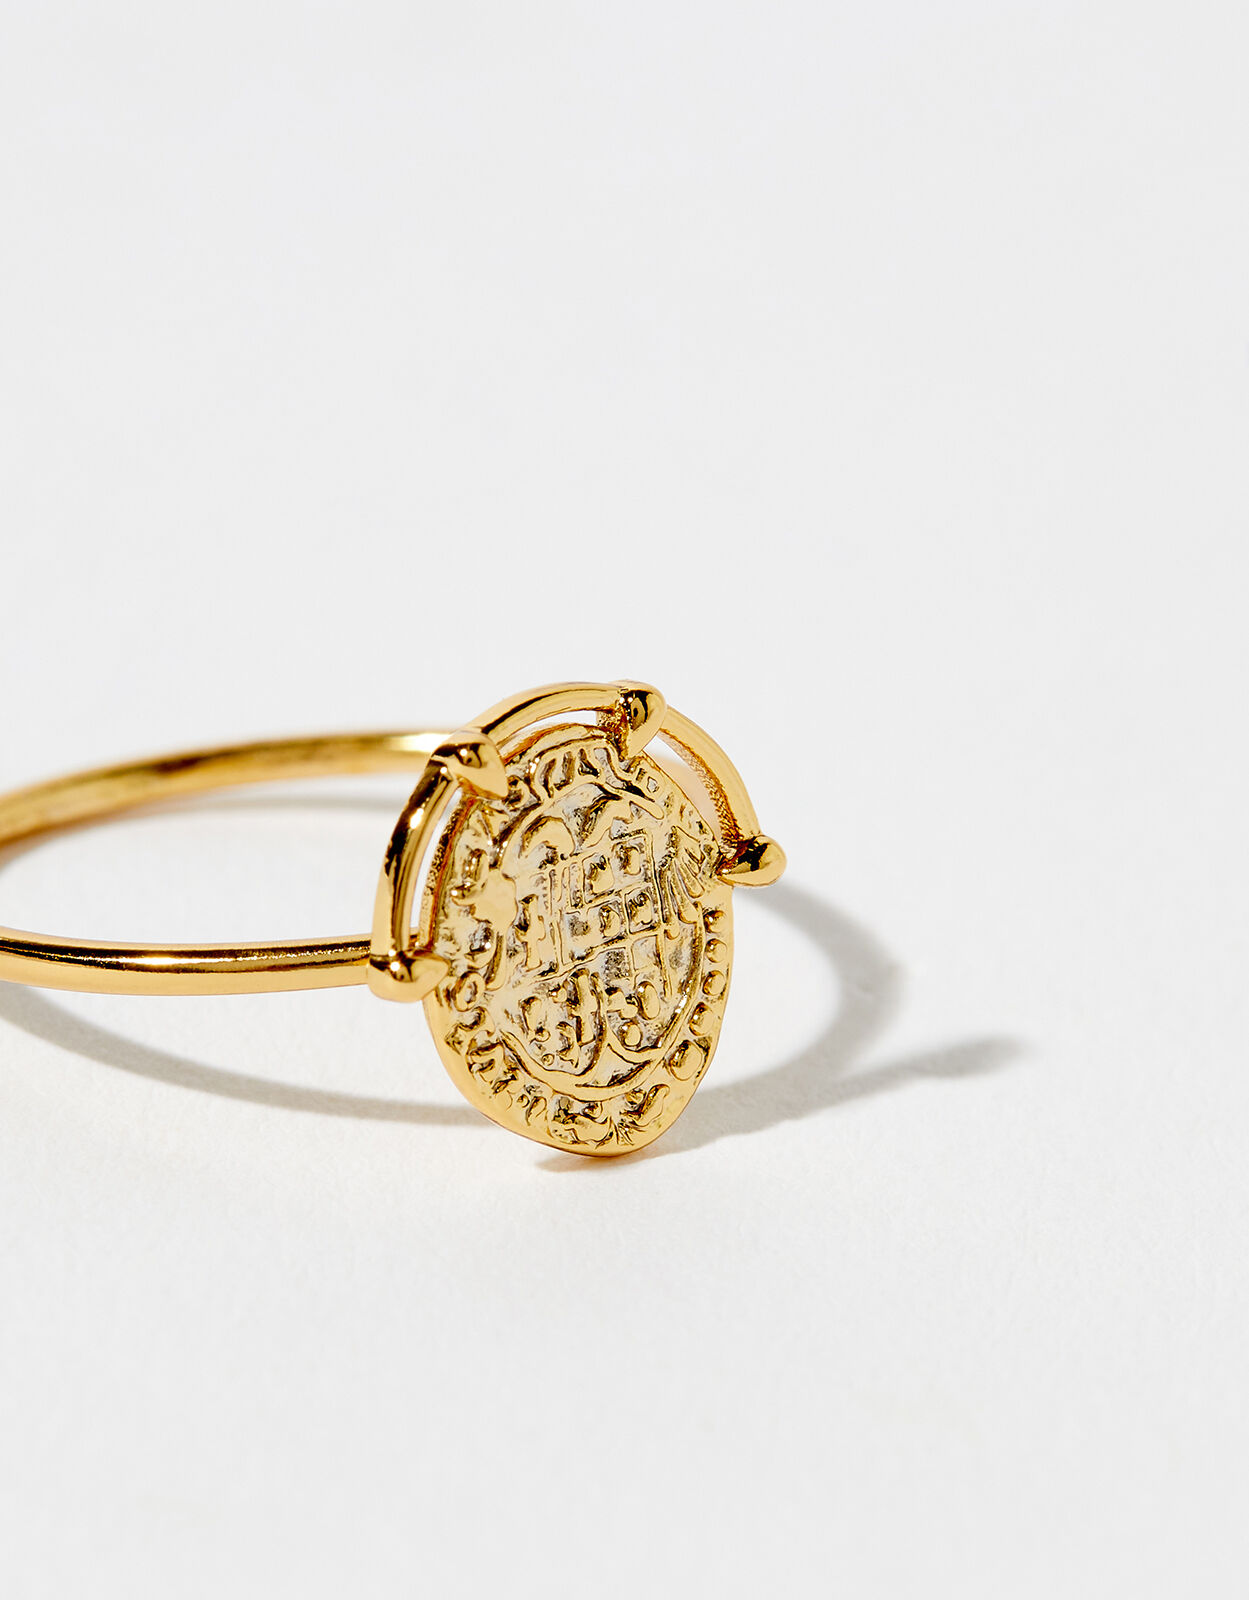 14k Gold Coin Ring, Christian Ring, Greek Christian Ring, Solid Gold Coin  Ring, Byzantine Cross Ring, Orthodox Gold Coin Ring, 14K Gold Ring • AntEva  Crafts